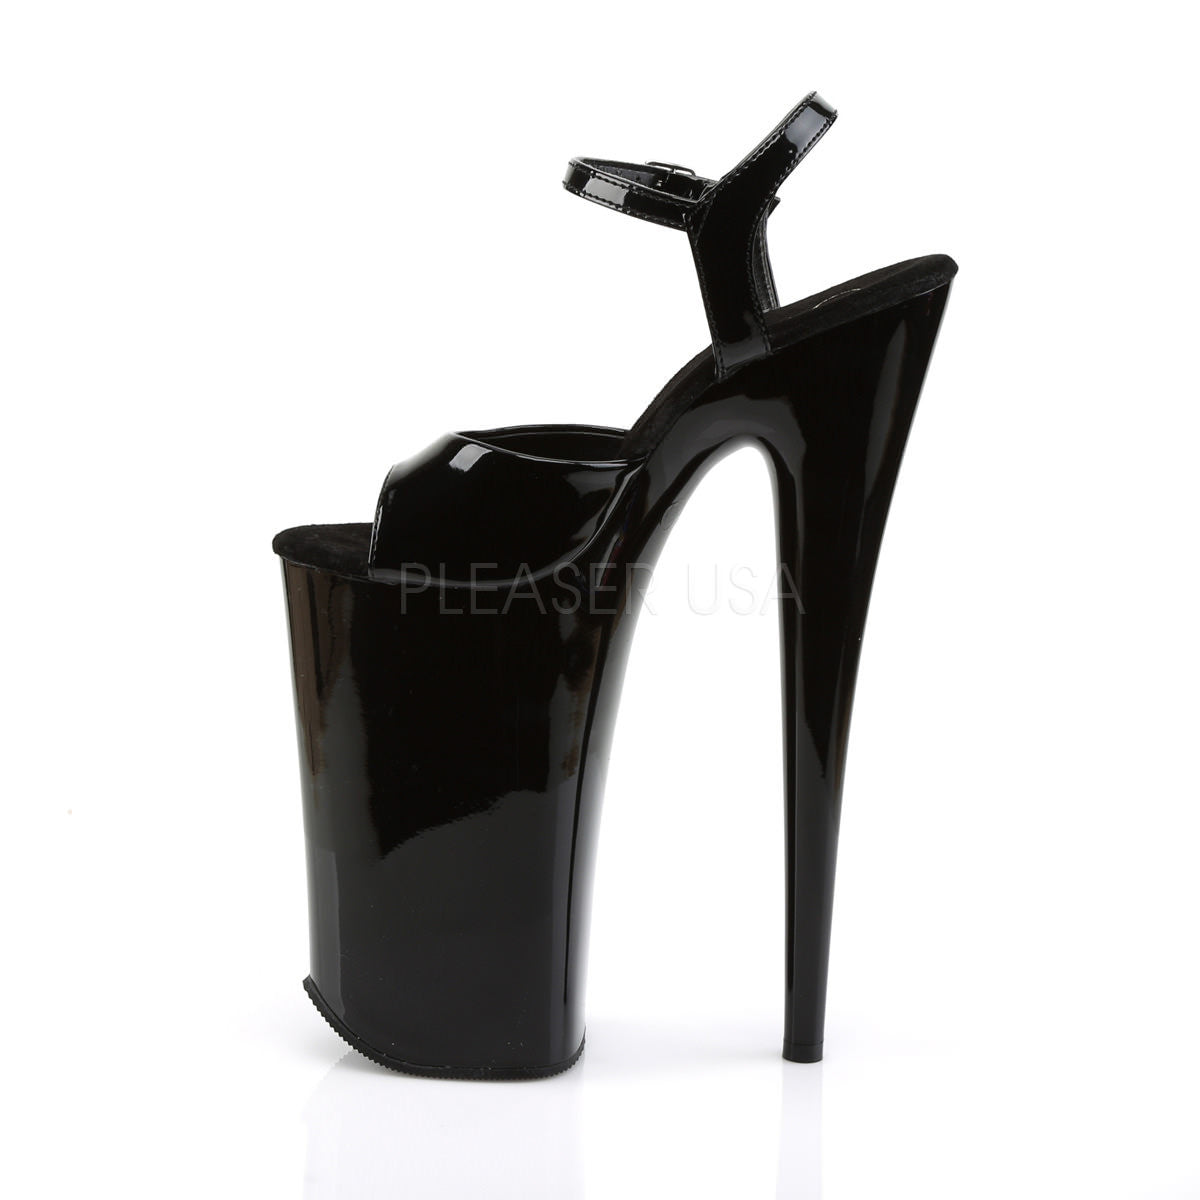 Pleaser Beyond-009 - White Patent in Sexy Heels & Platforms - $97.95